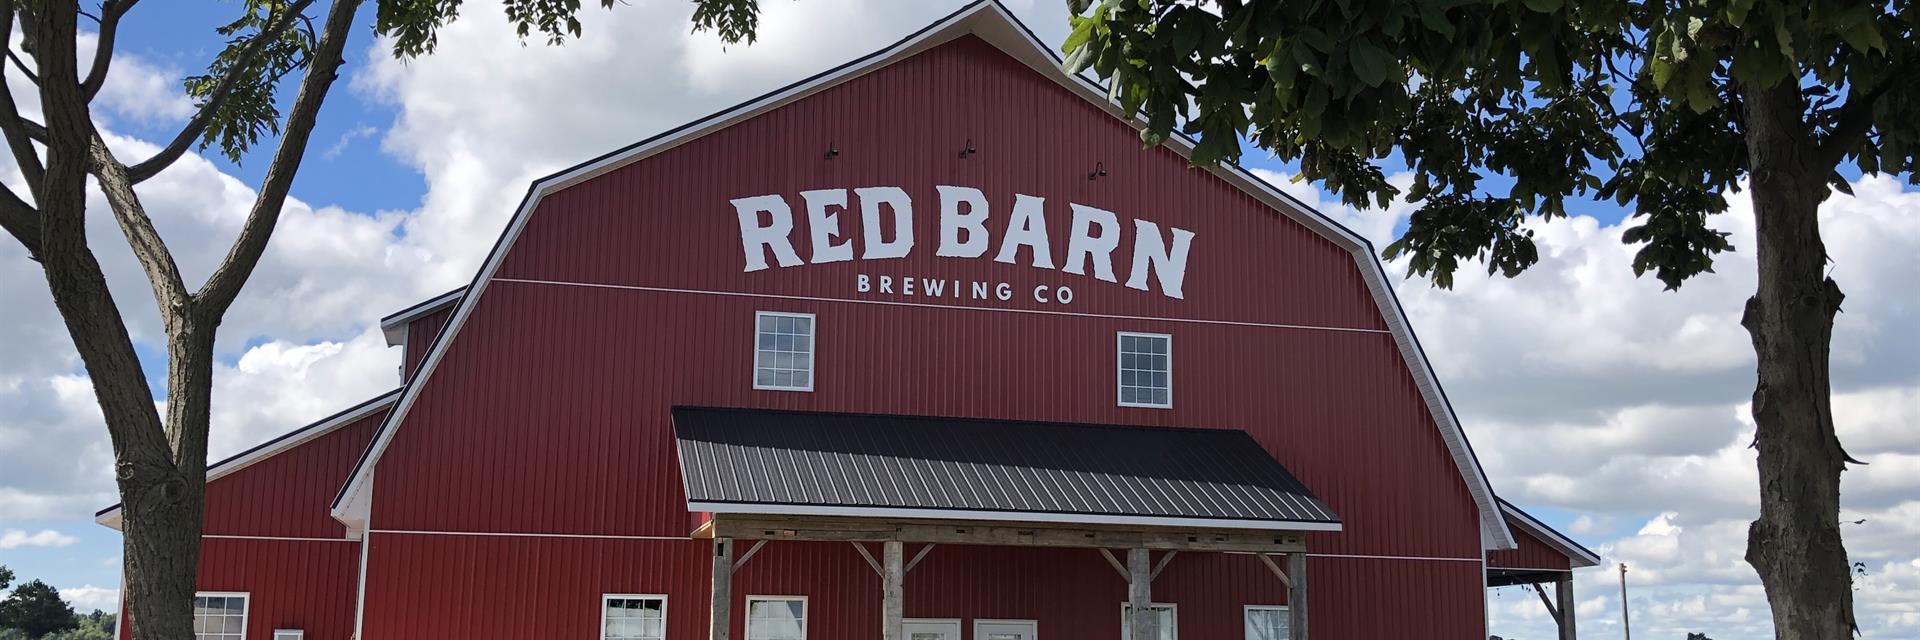 Red Barn Brewing Company barn.